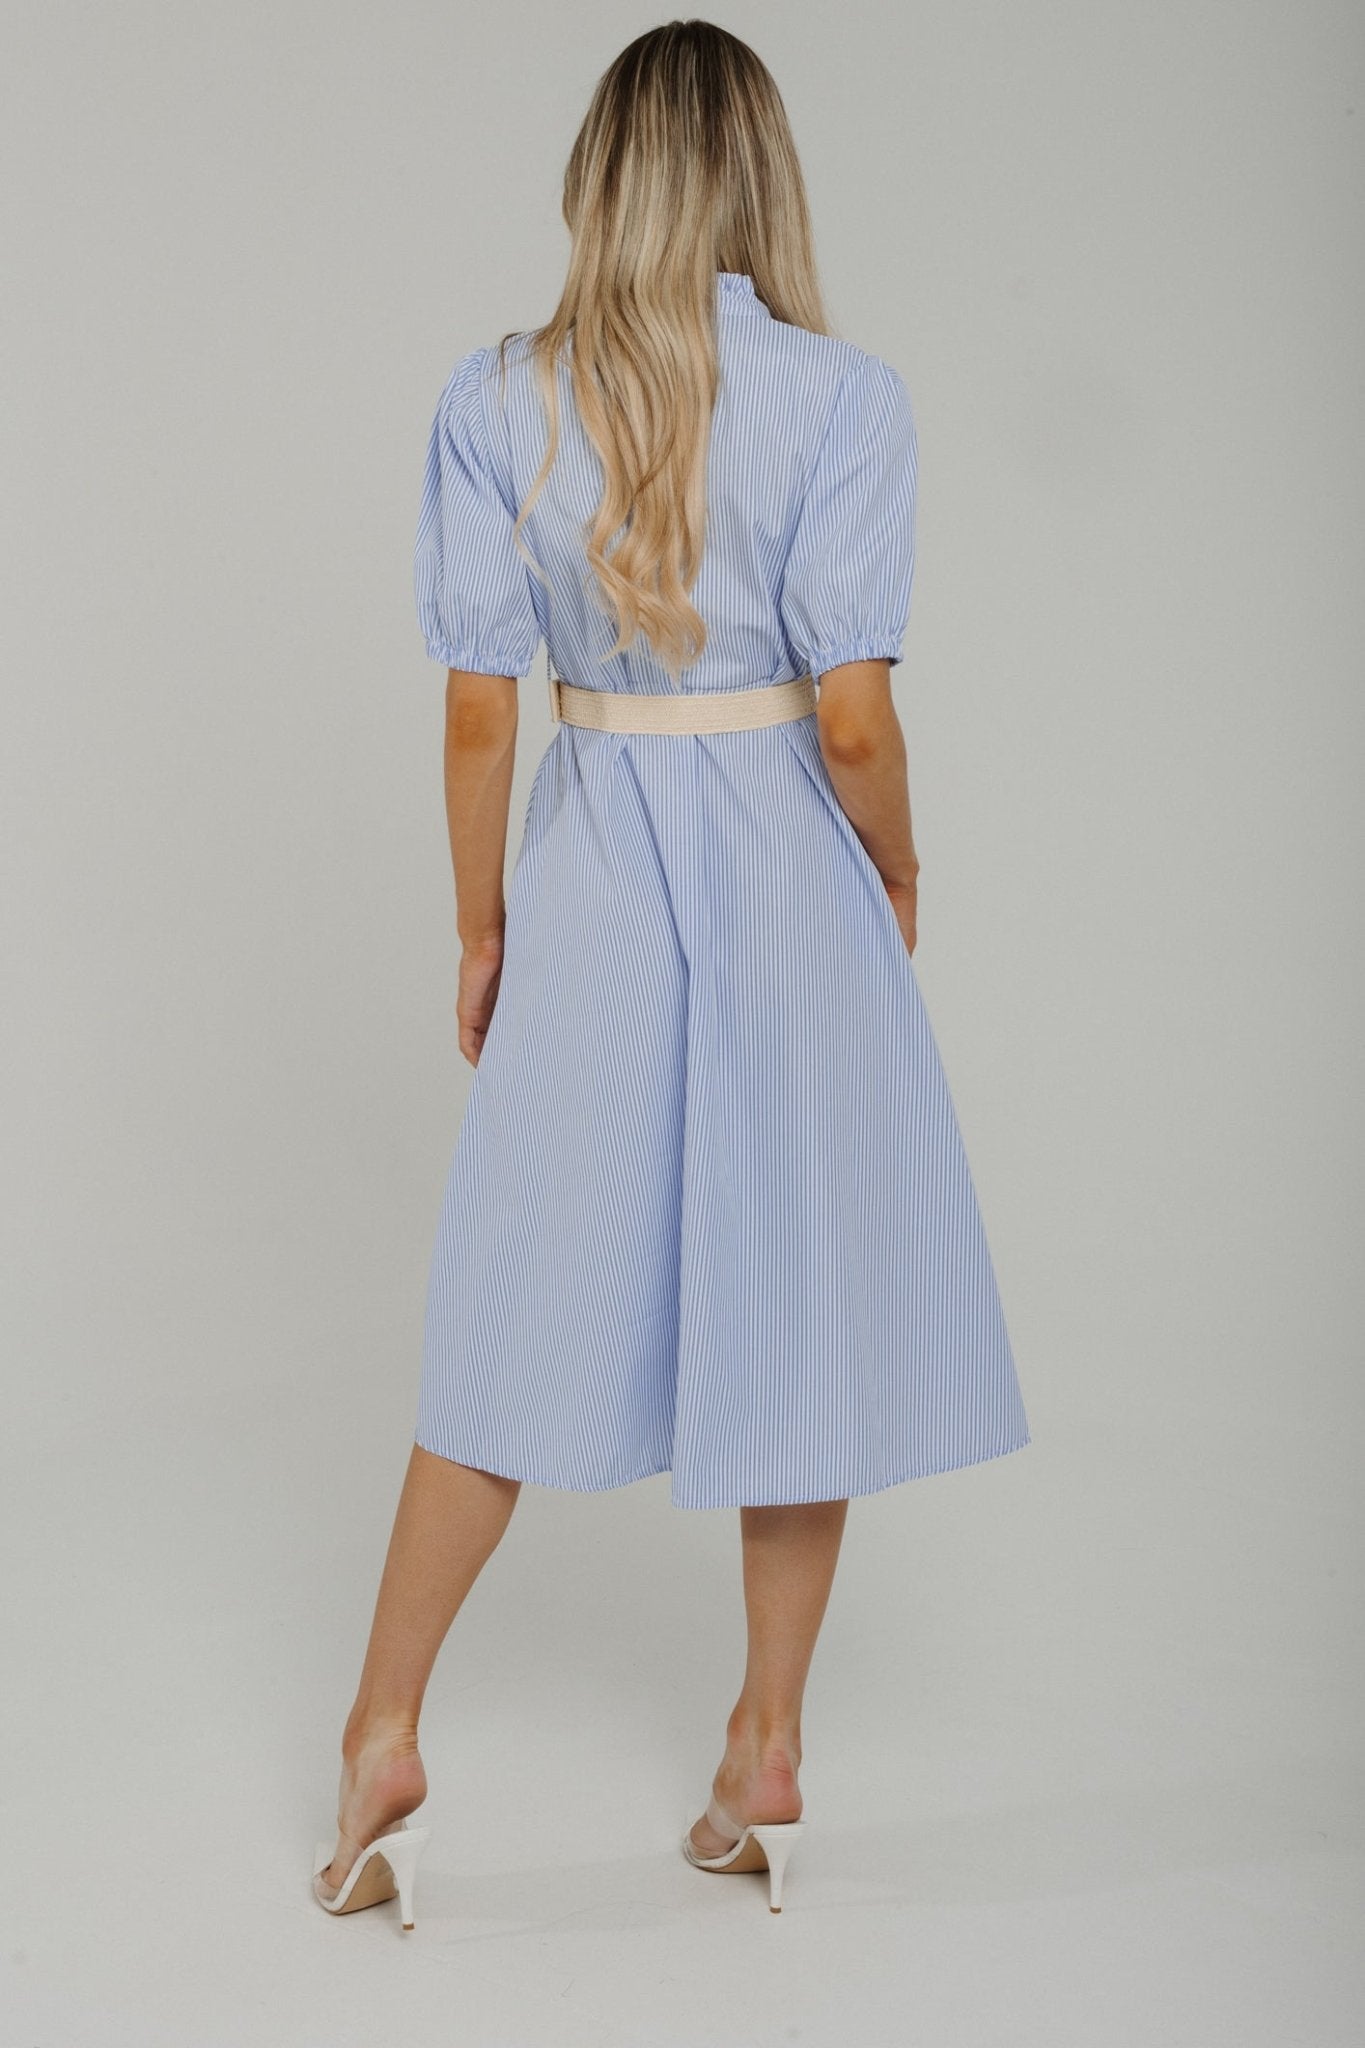 Indie Belted Puff Sleeve Dress In Blue Stripe - The Walk in Wardrobe